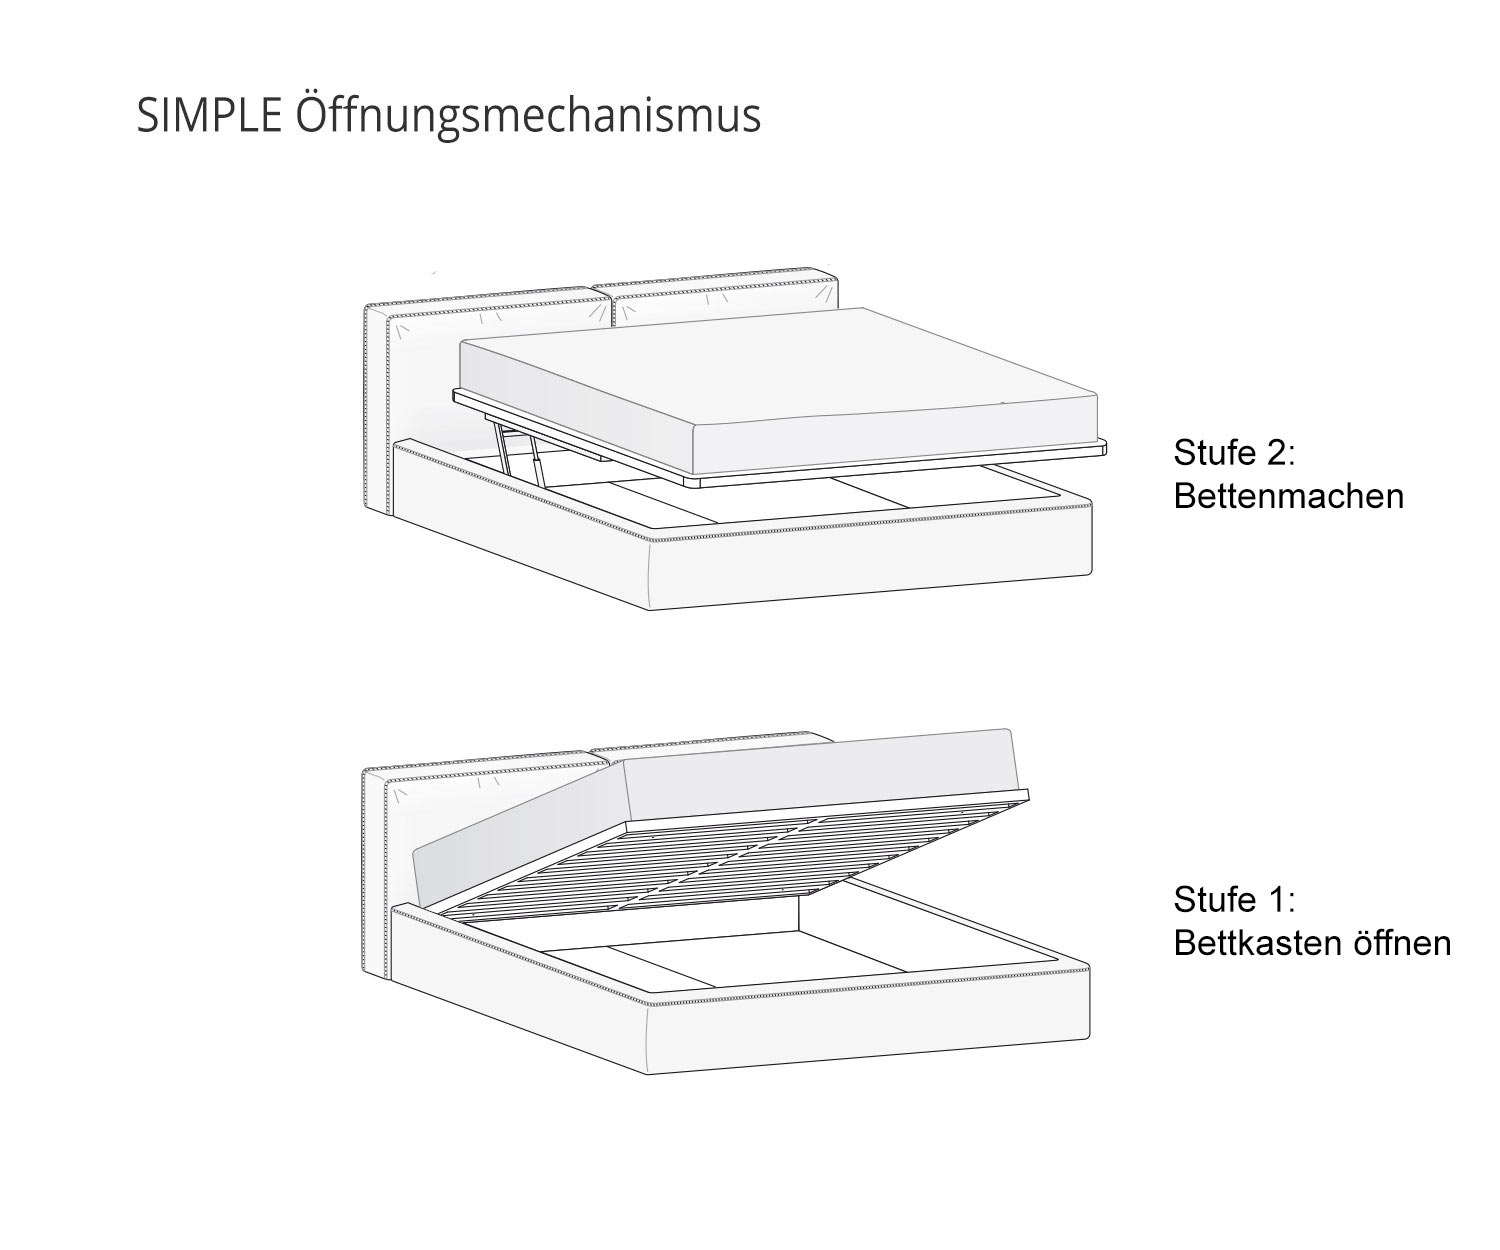 Novamobili Modo designer bed SIMPLE opening mechanism